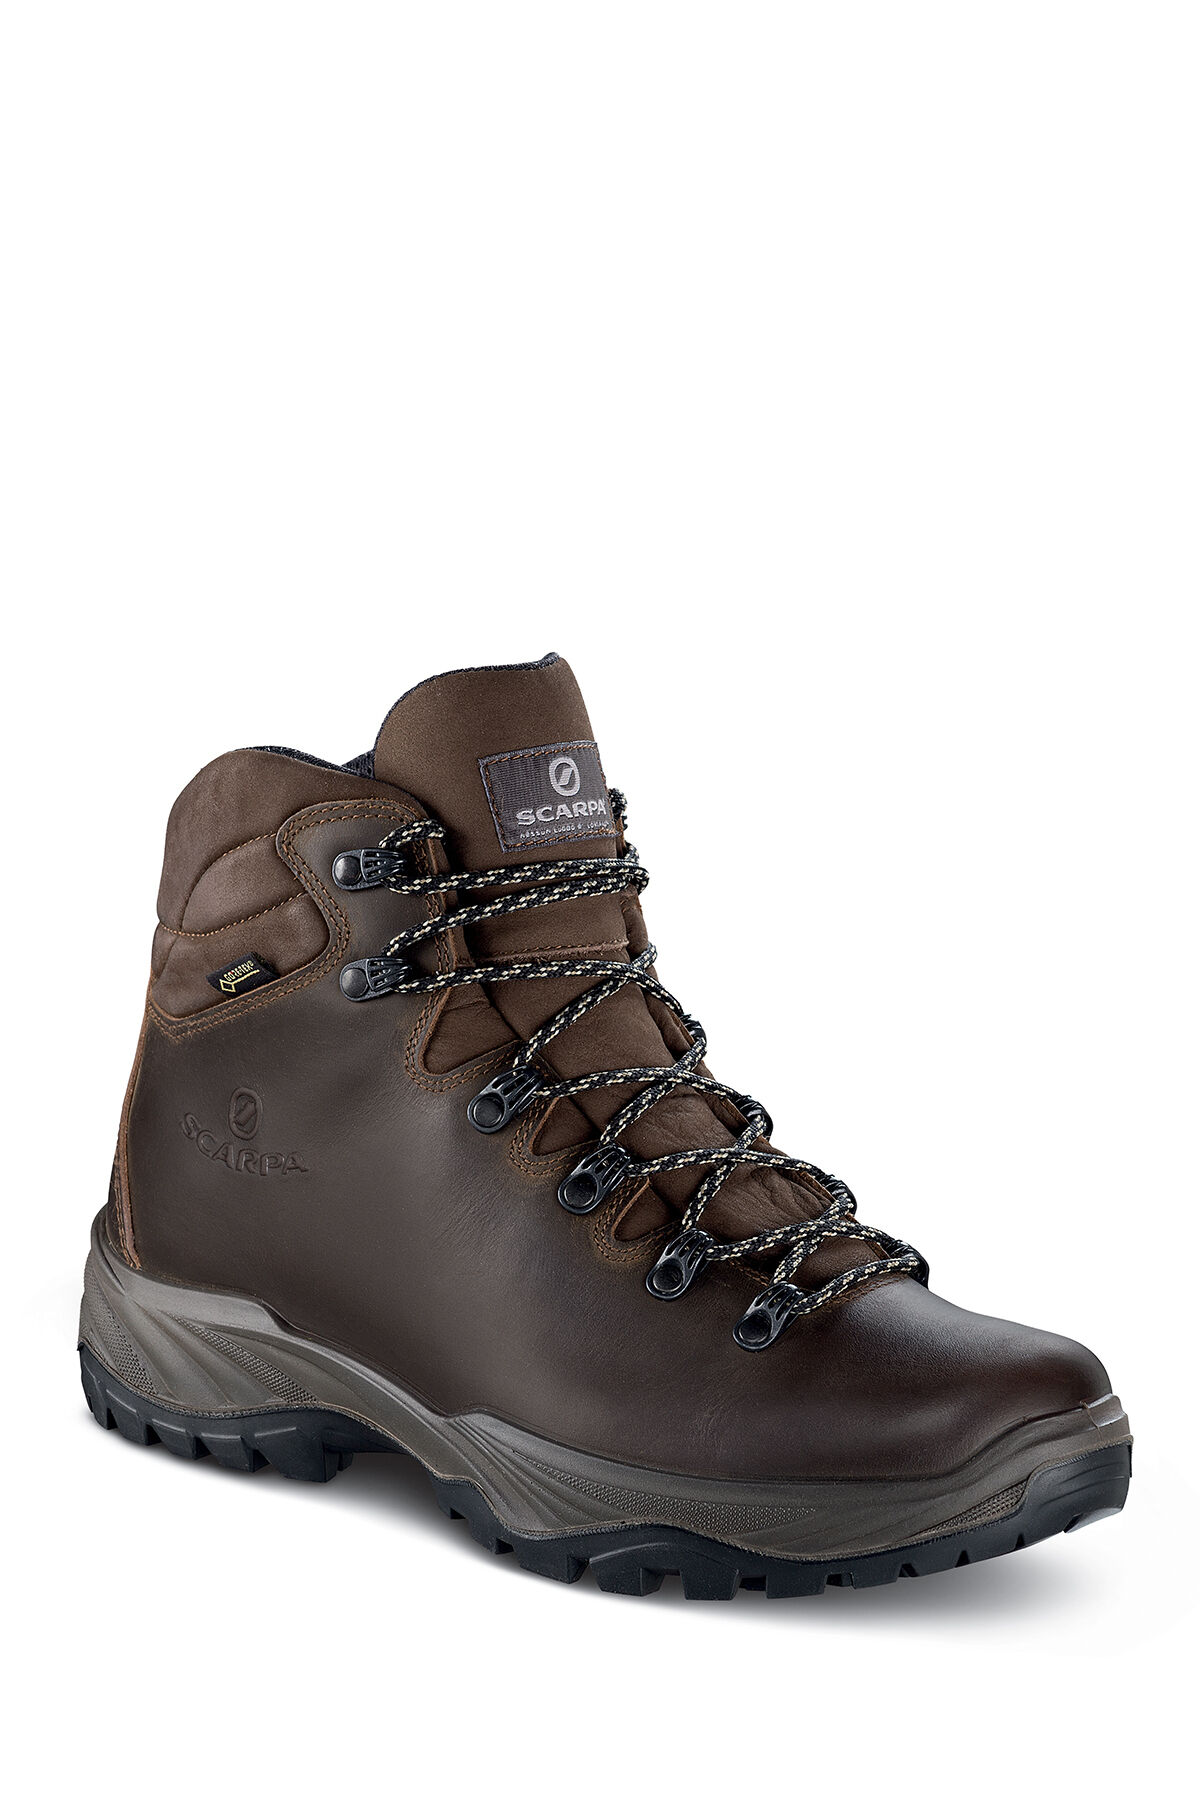 scarpa terra gtx hiking boots